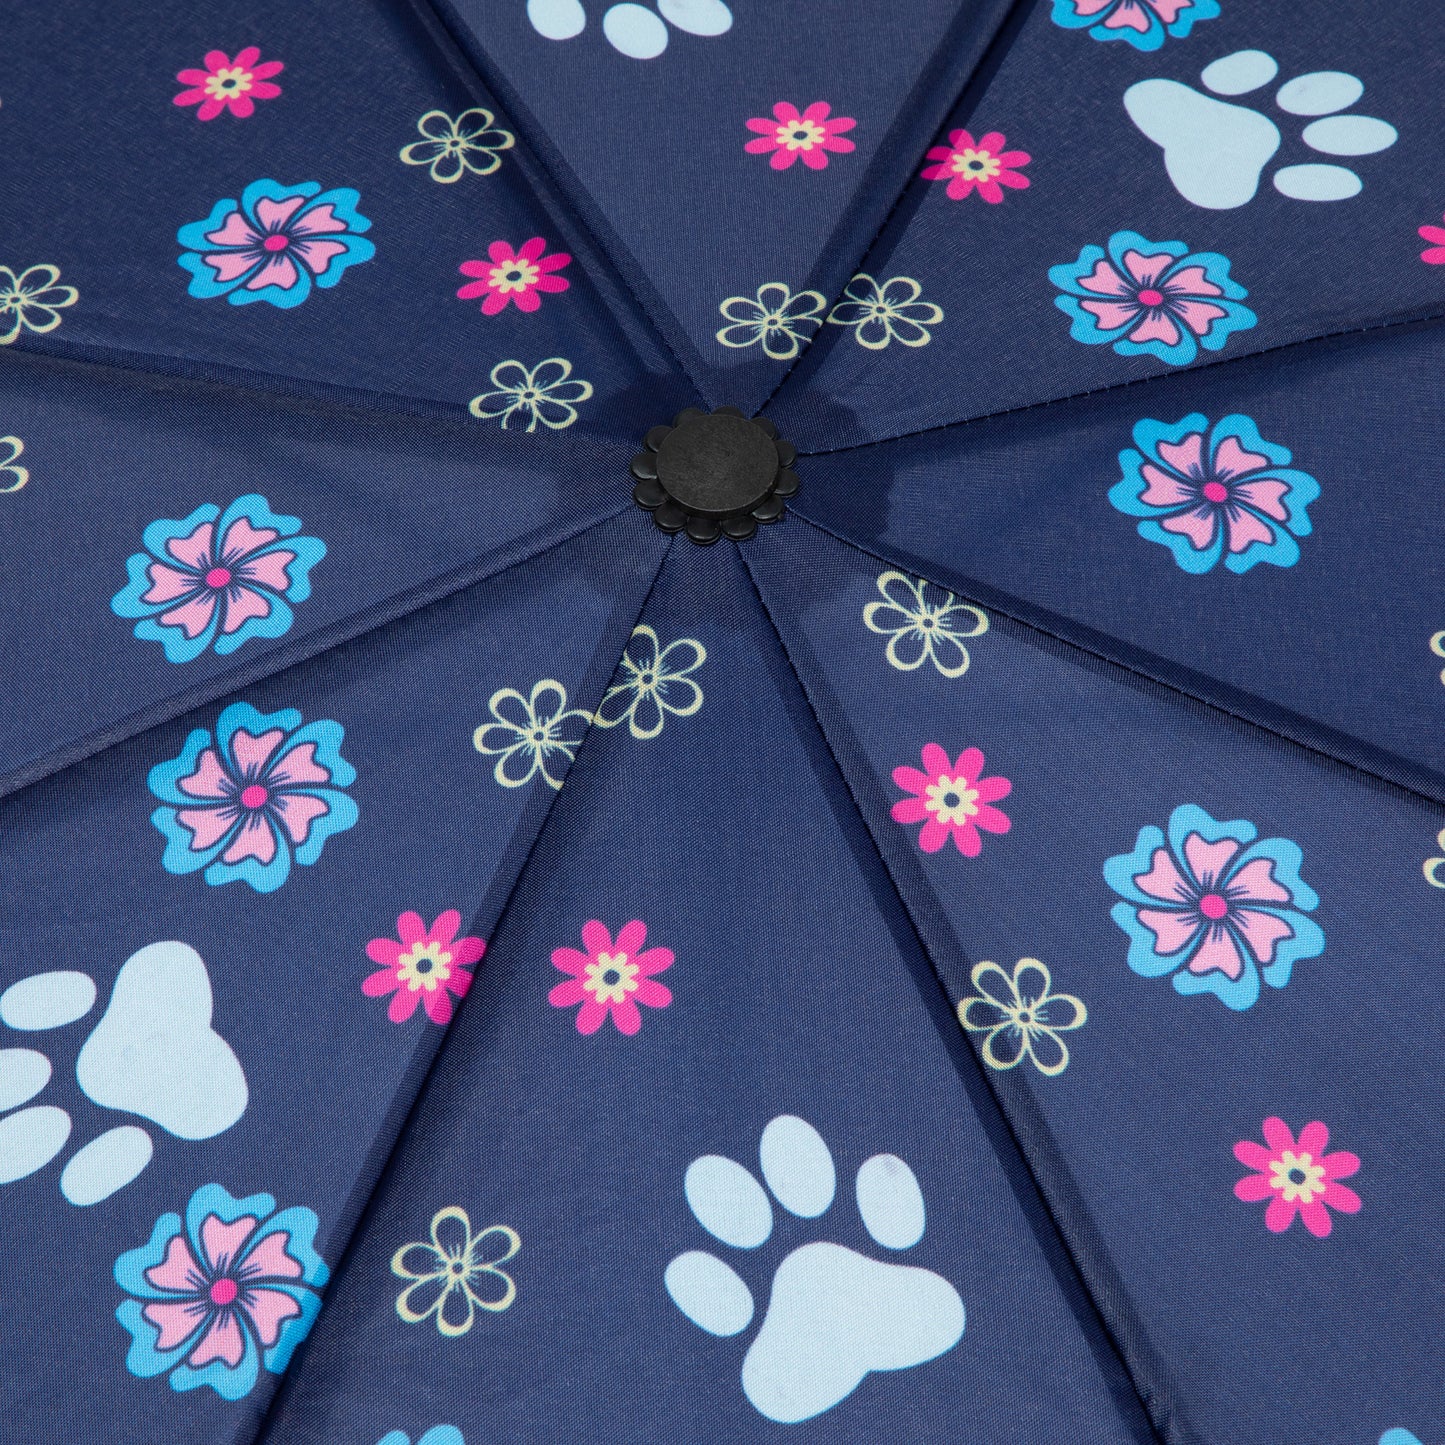 Rainy Day Paw Print Umbrella